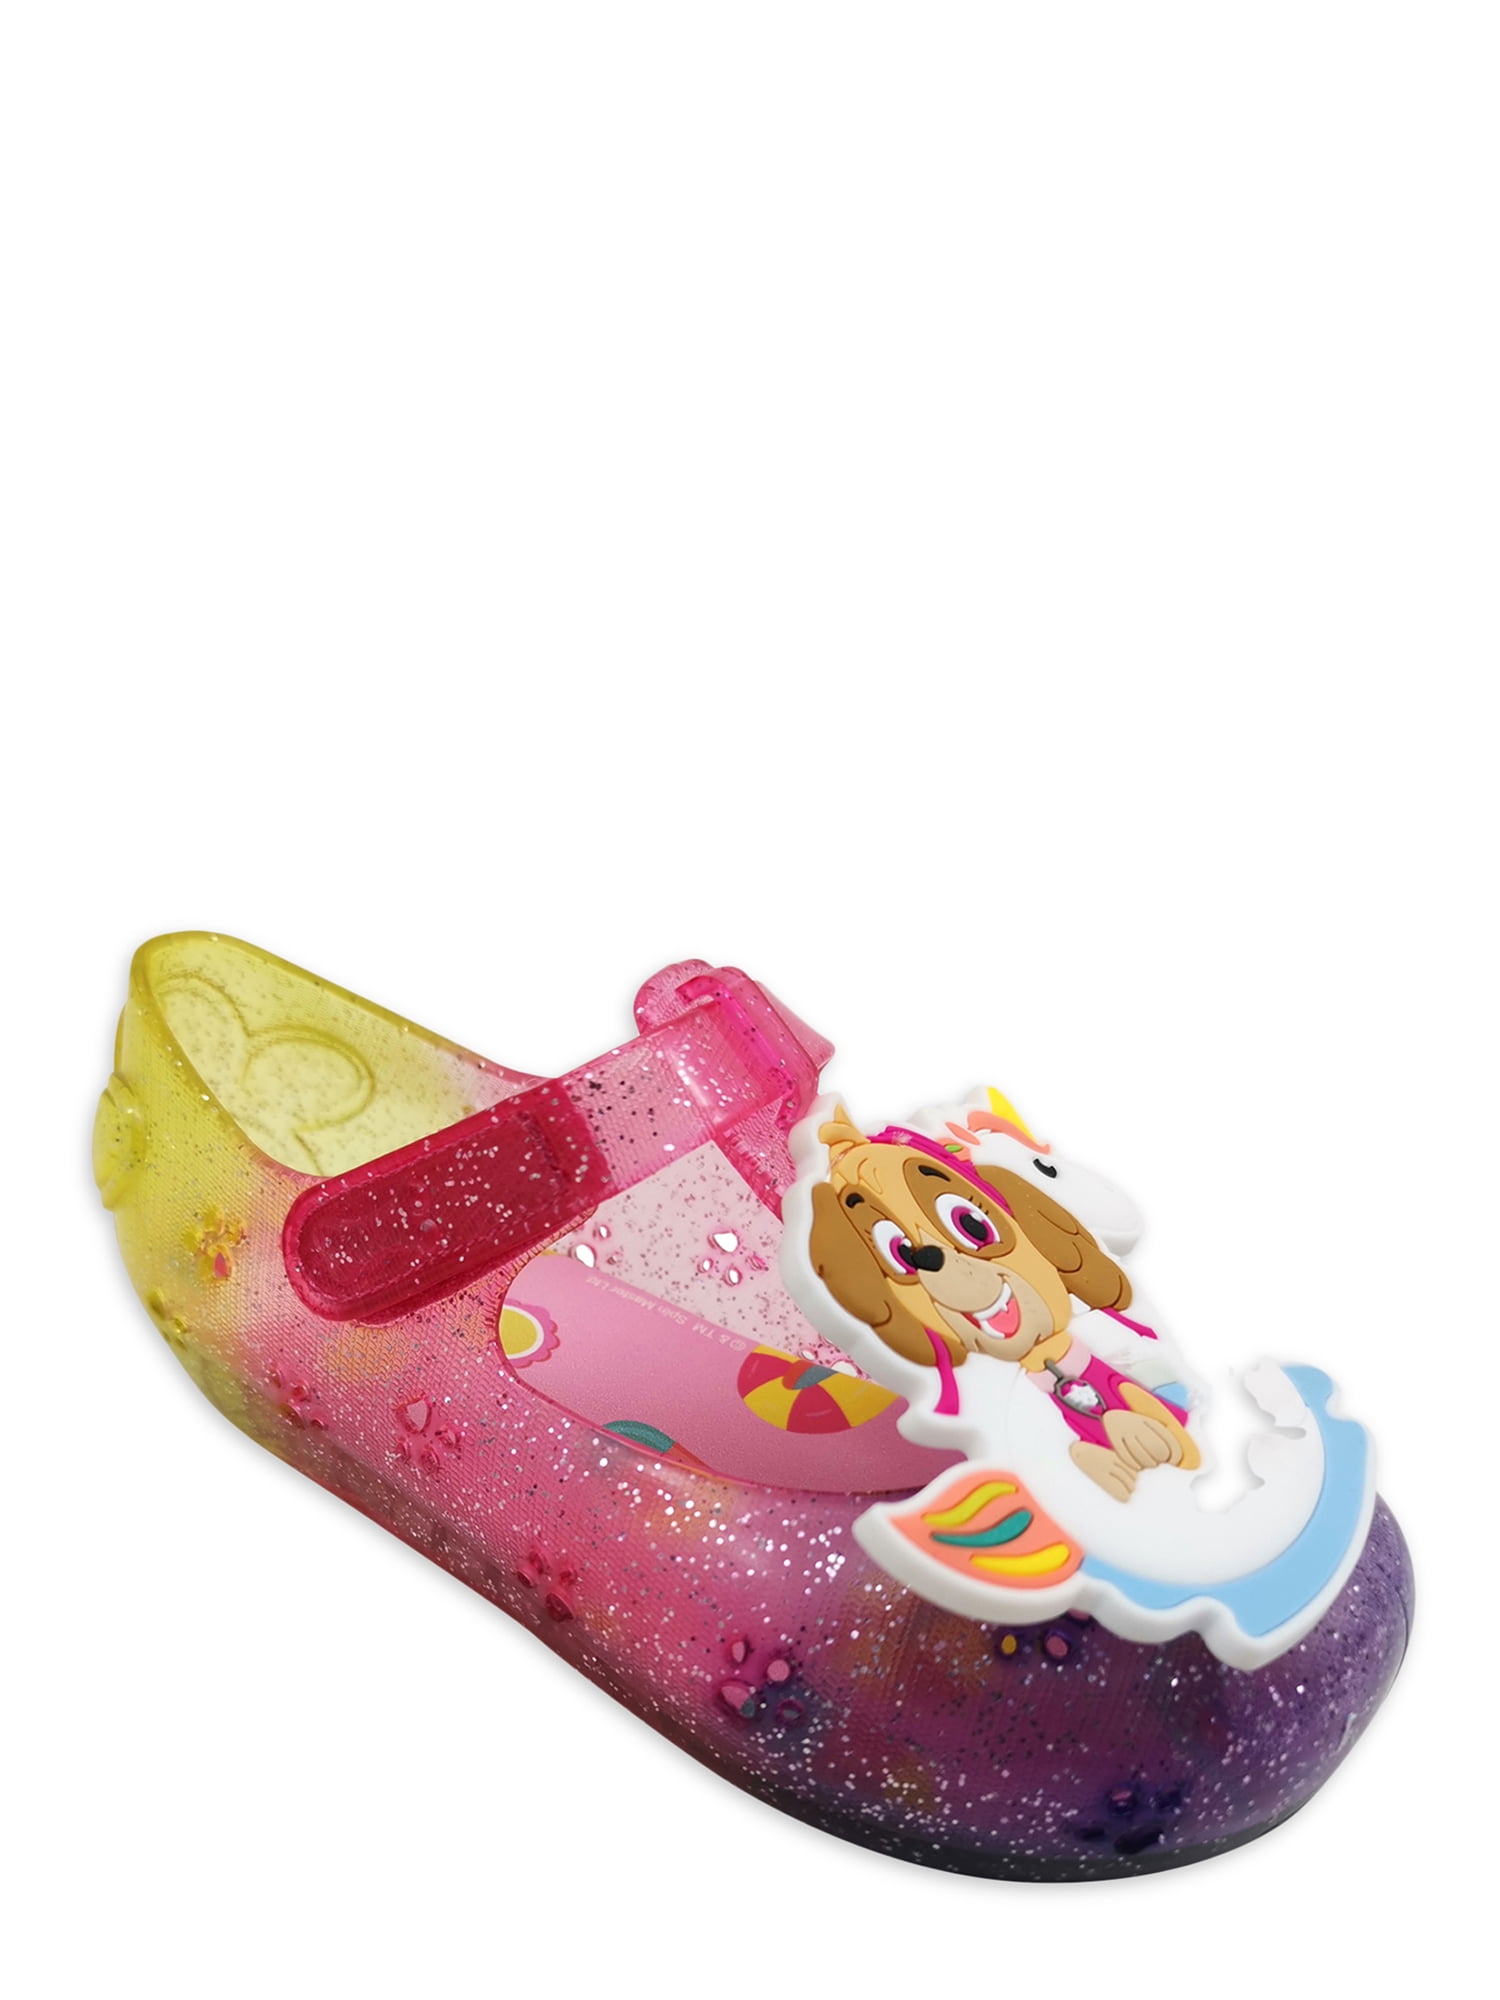 Disney Princess Belle & Flower Jelly Toddler Girls Sandals *2 PACK*  7/8 & 7 